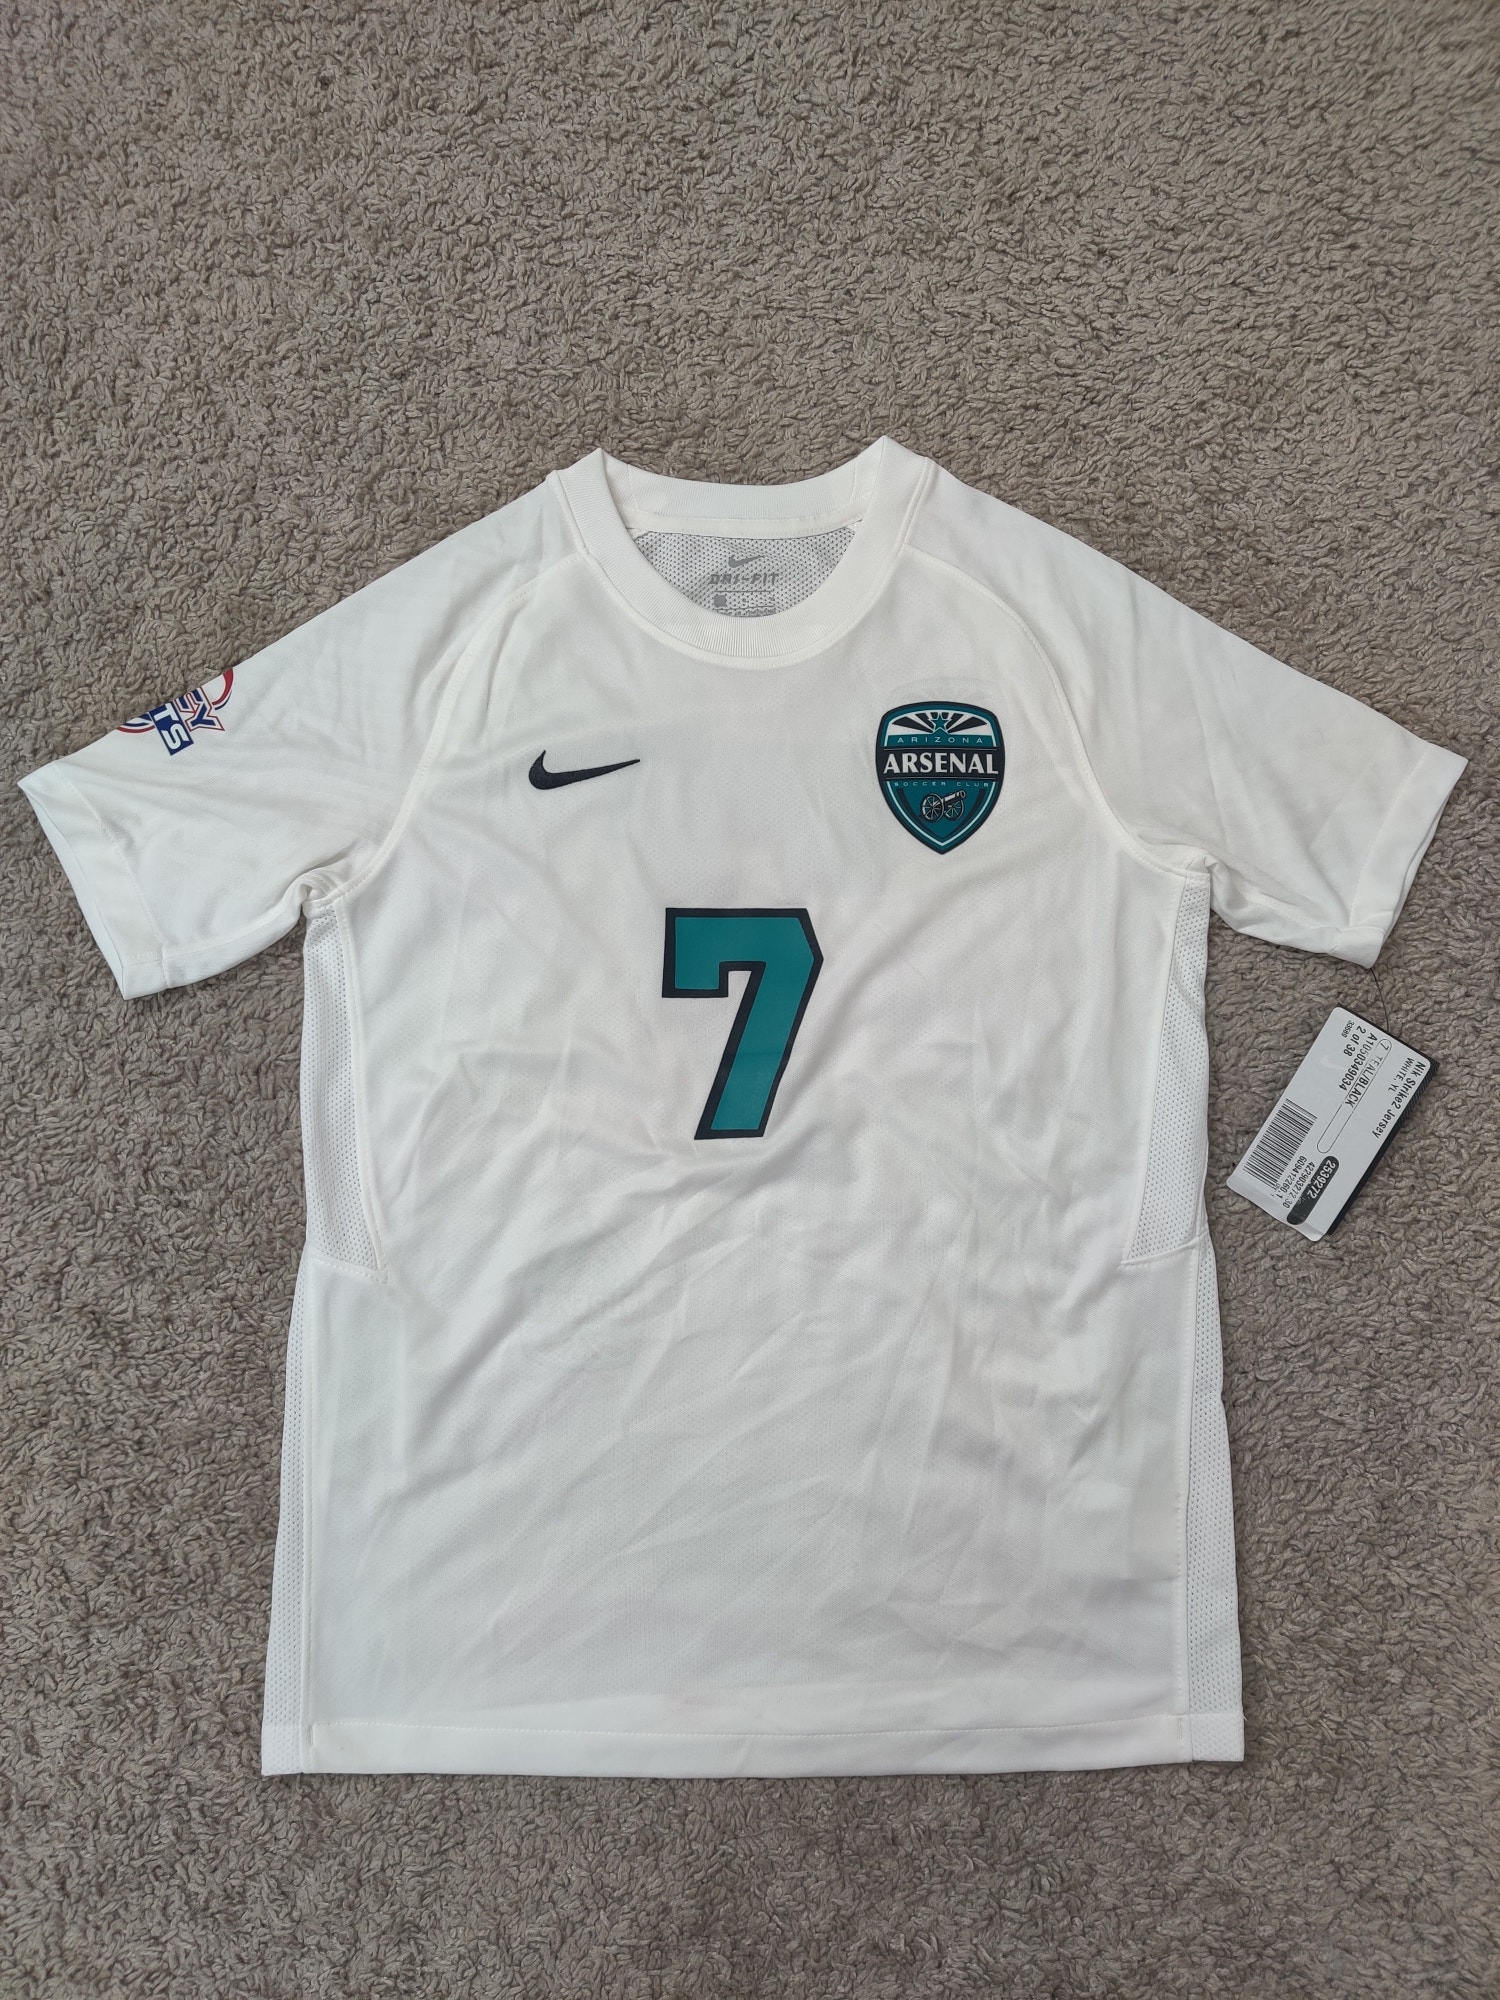 (V) NEW Nike Dri-Fit Youth Arsenal Arizona Soccer Club #7 shirt jersey sz L - Picture 3 of 12